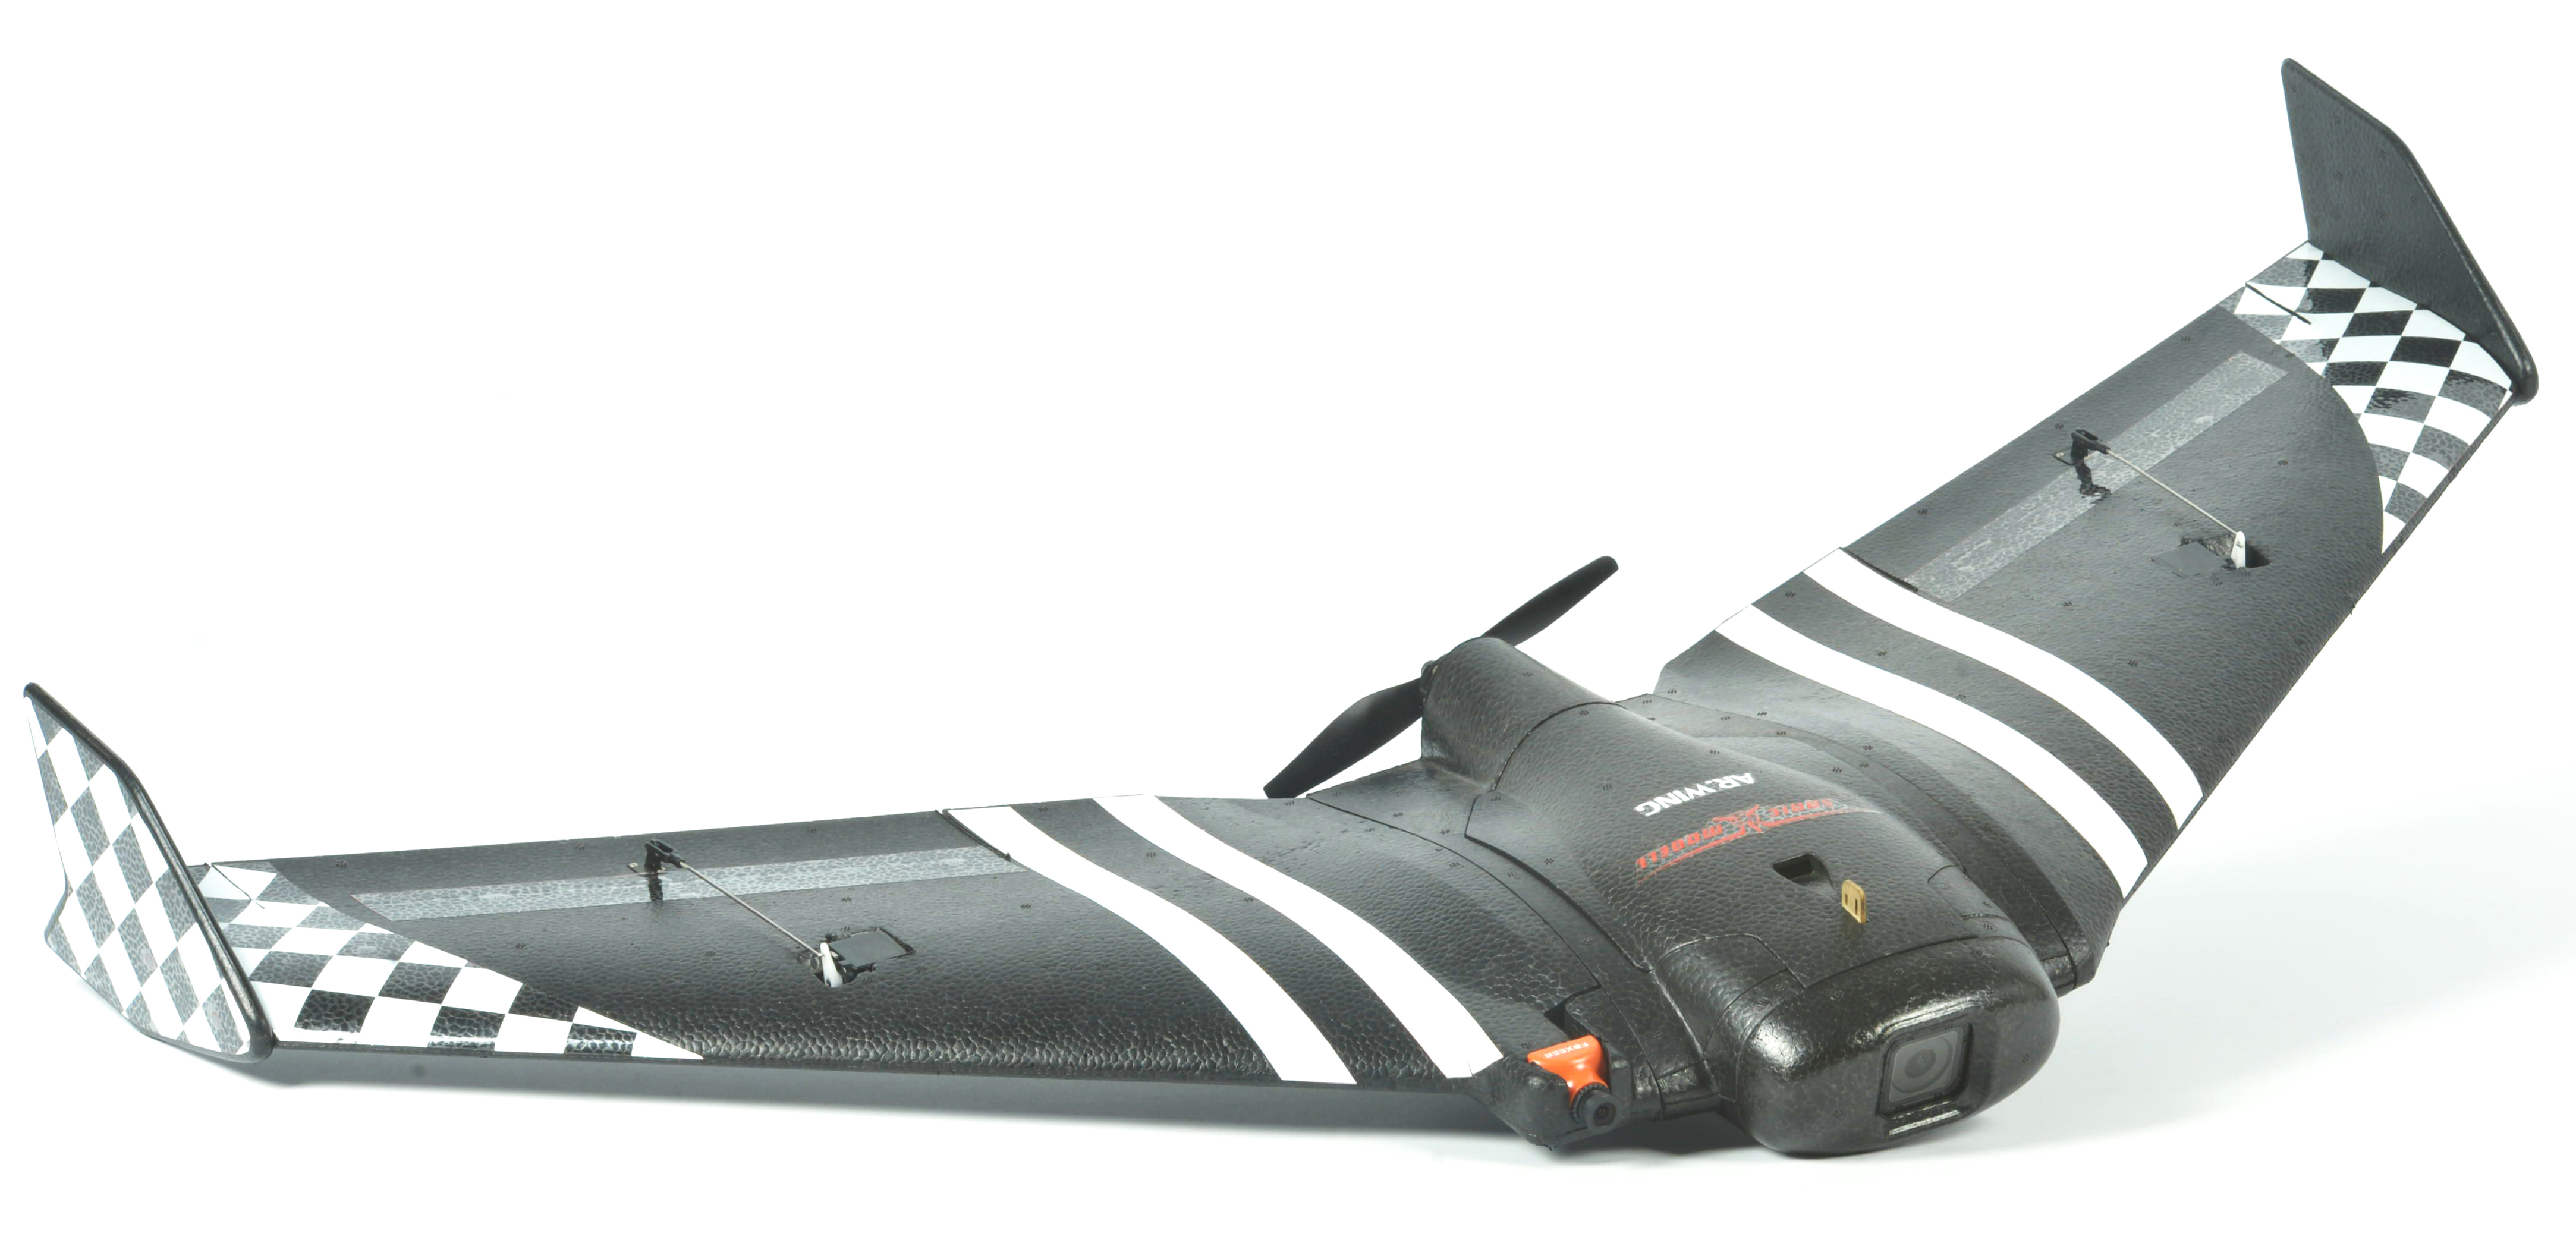 SonicModell AR.Wing Classic 900 mm EPP Flying Wing RC Airplane - Zum Vergrößern klicken